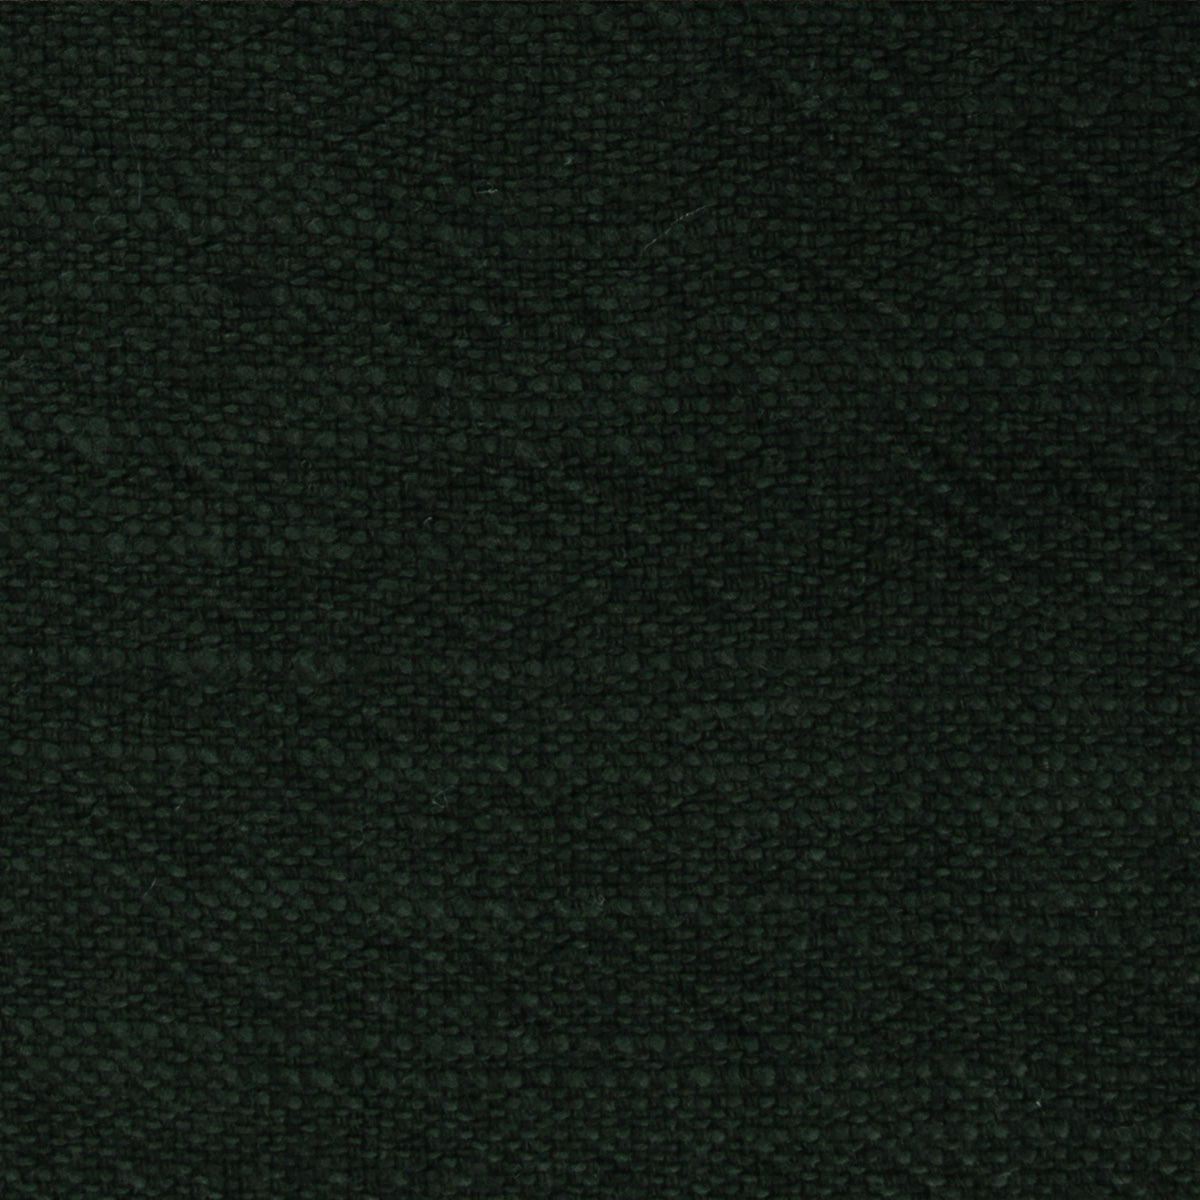 Forest Green Crocodile Linen Pocket Square Fabric